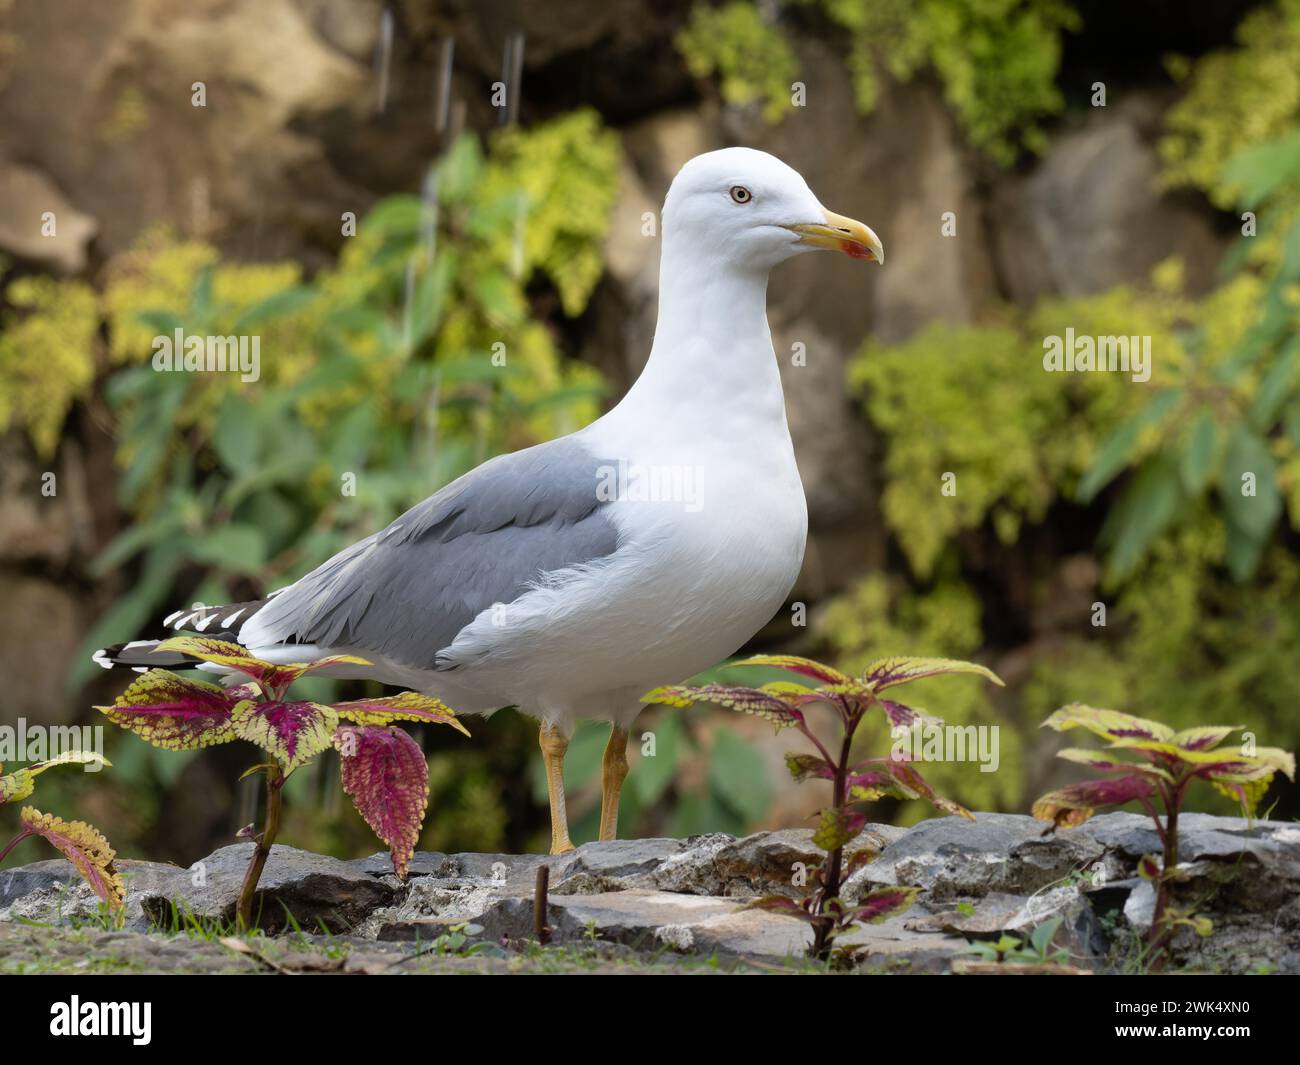 A profile image of a yellow-legged gull, Larus michahellis. Stock Photo